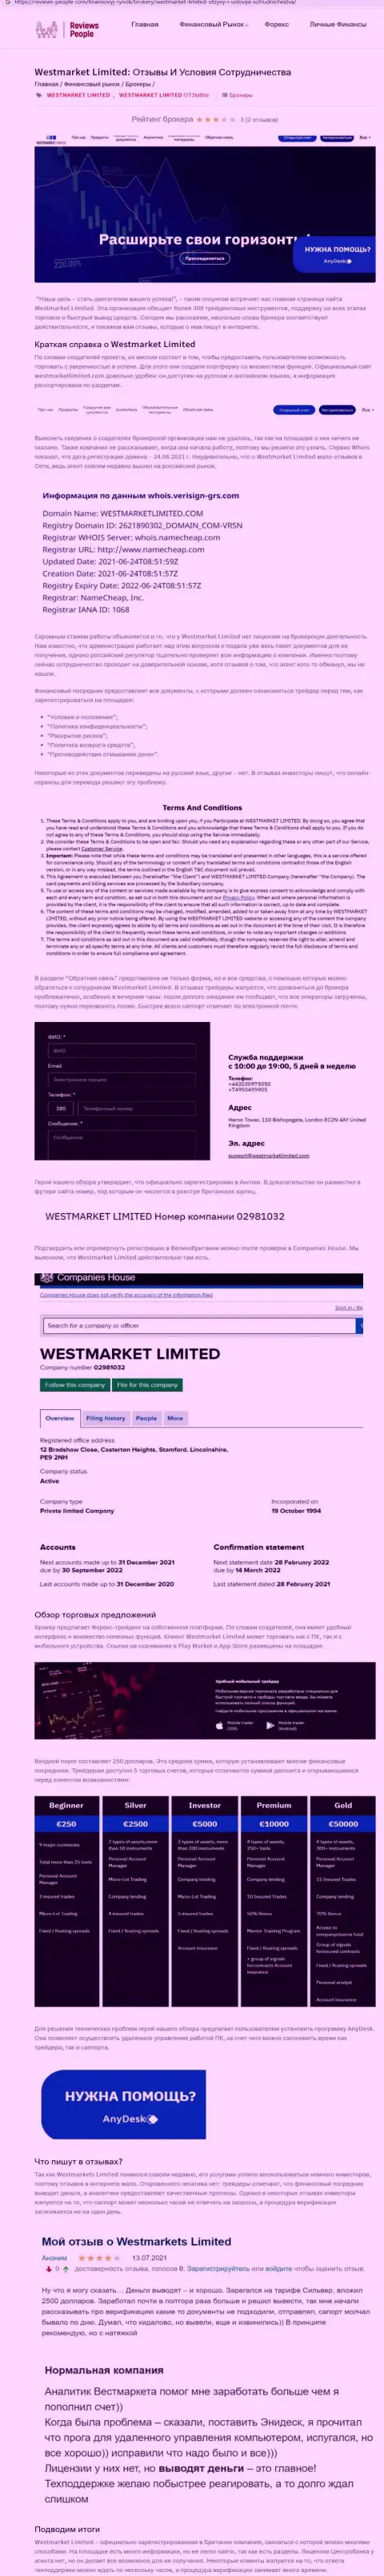 Публикация о Forex брокере WestMarketLimited на информационном ресурсе Ревиевс-Пеопле Ком